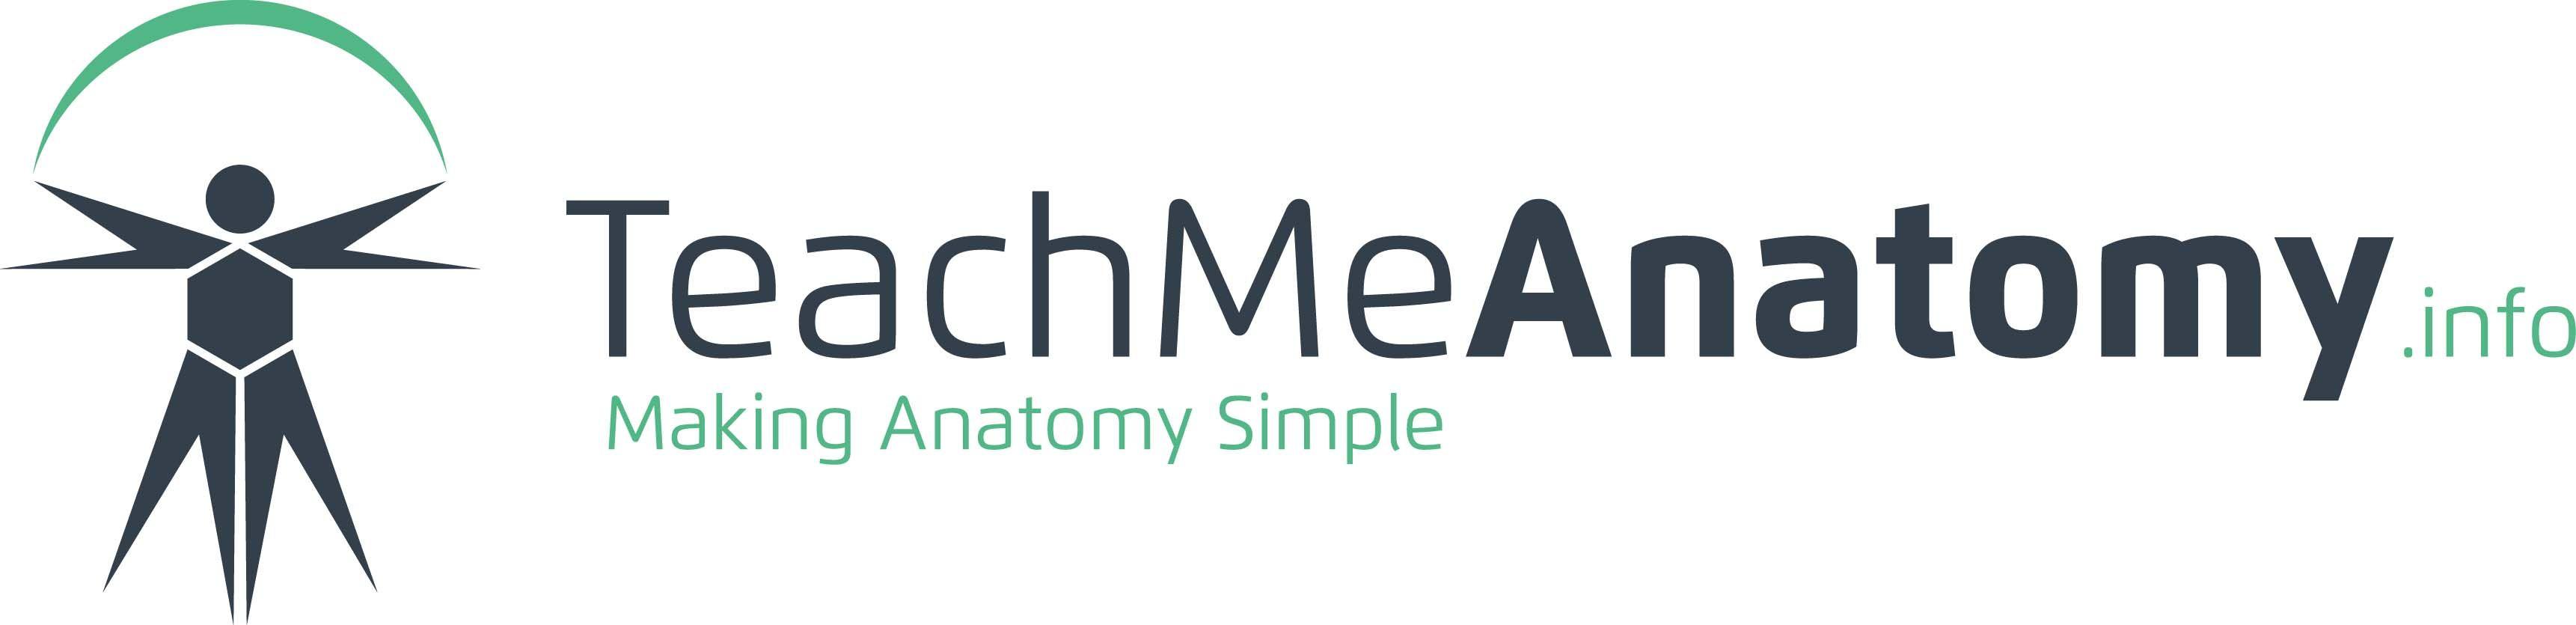 Anatomy Logo - TeachMeAnatomy - Making Anatomy Simple